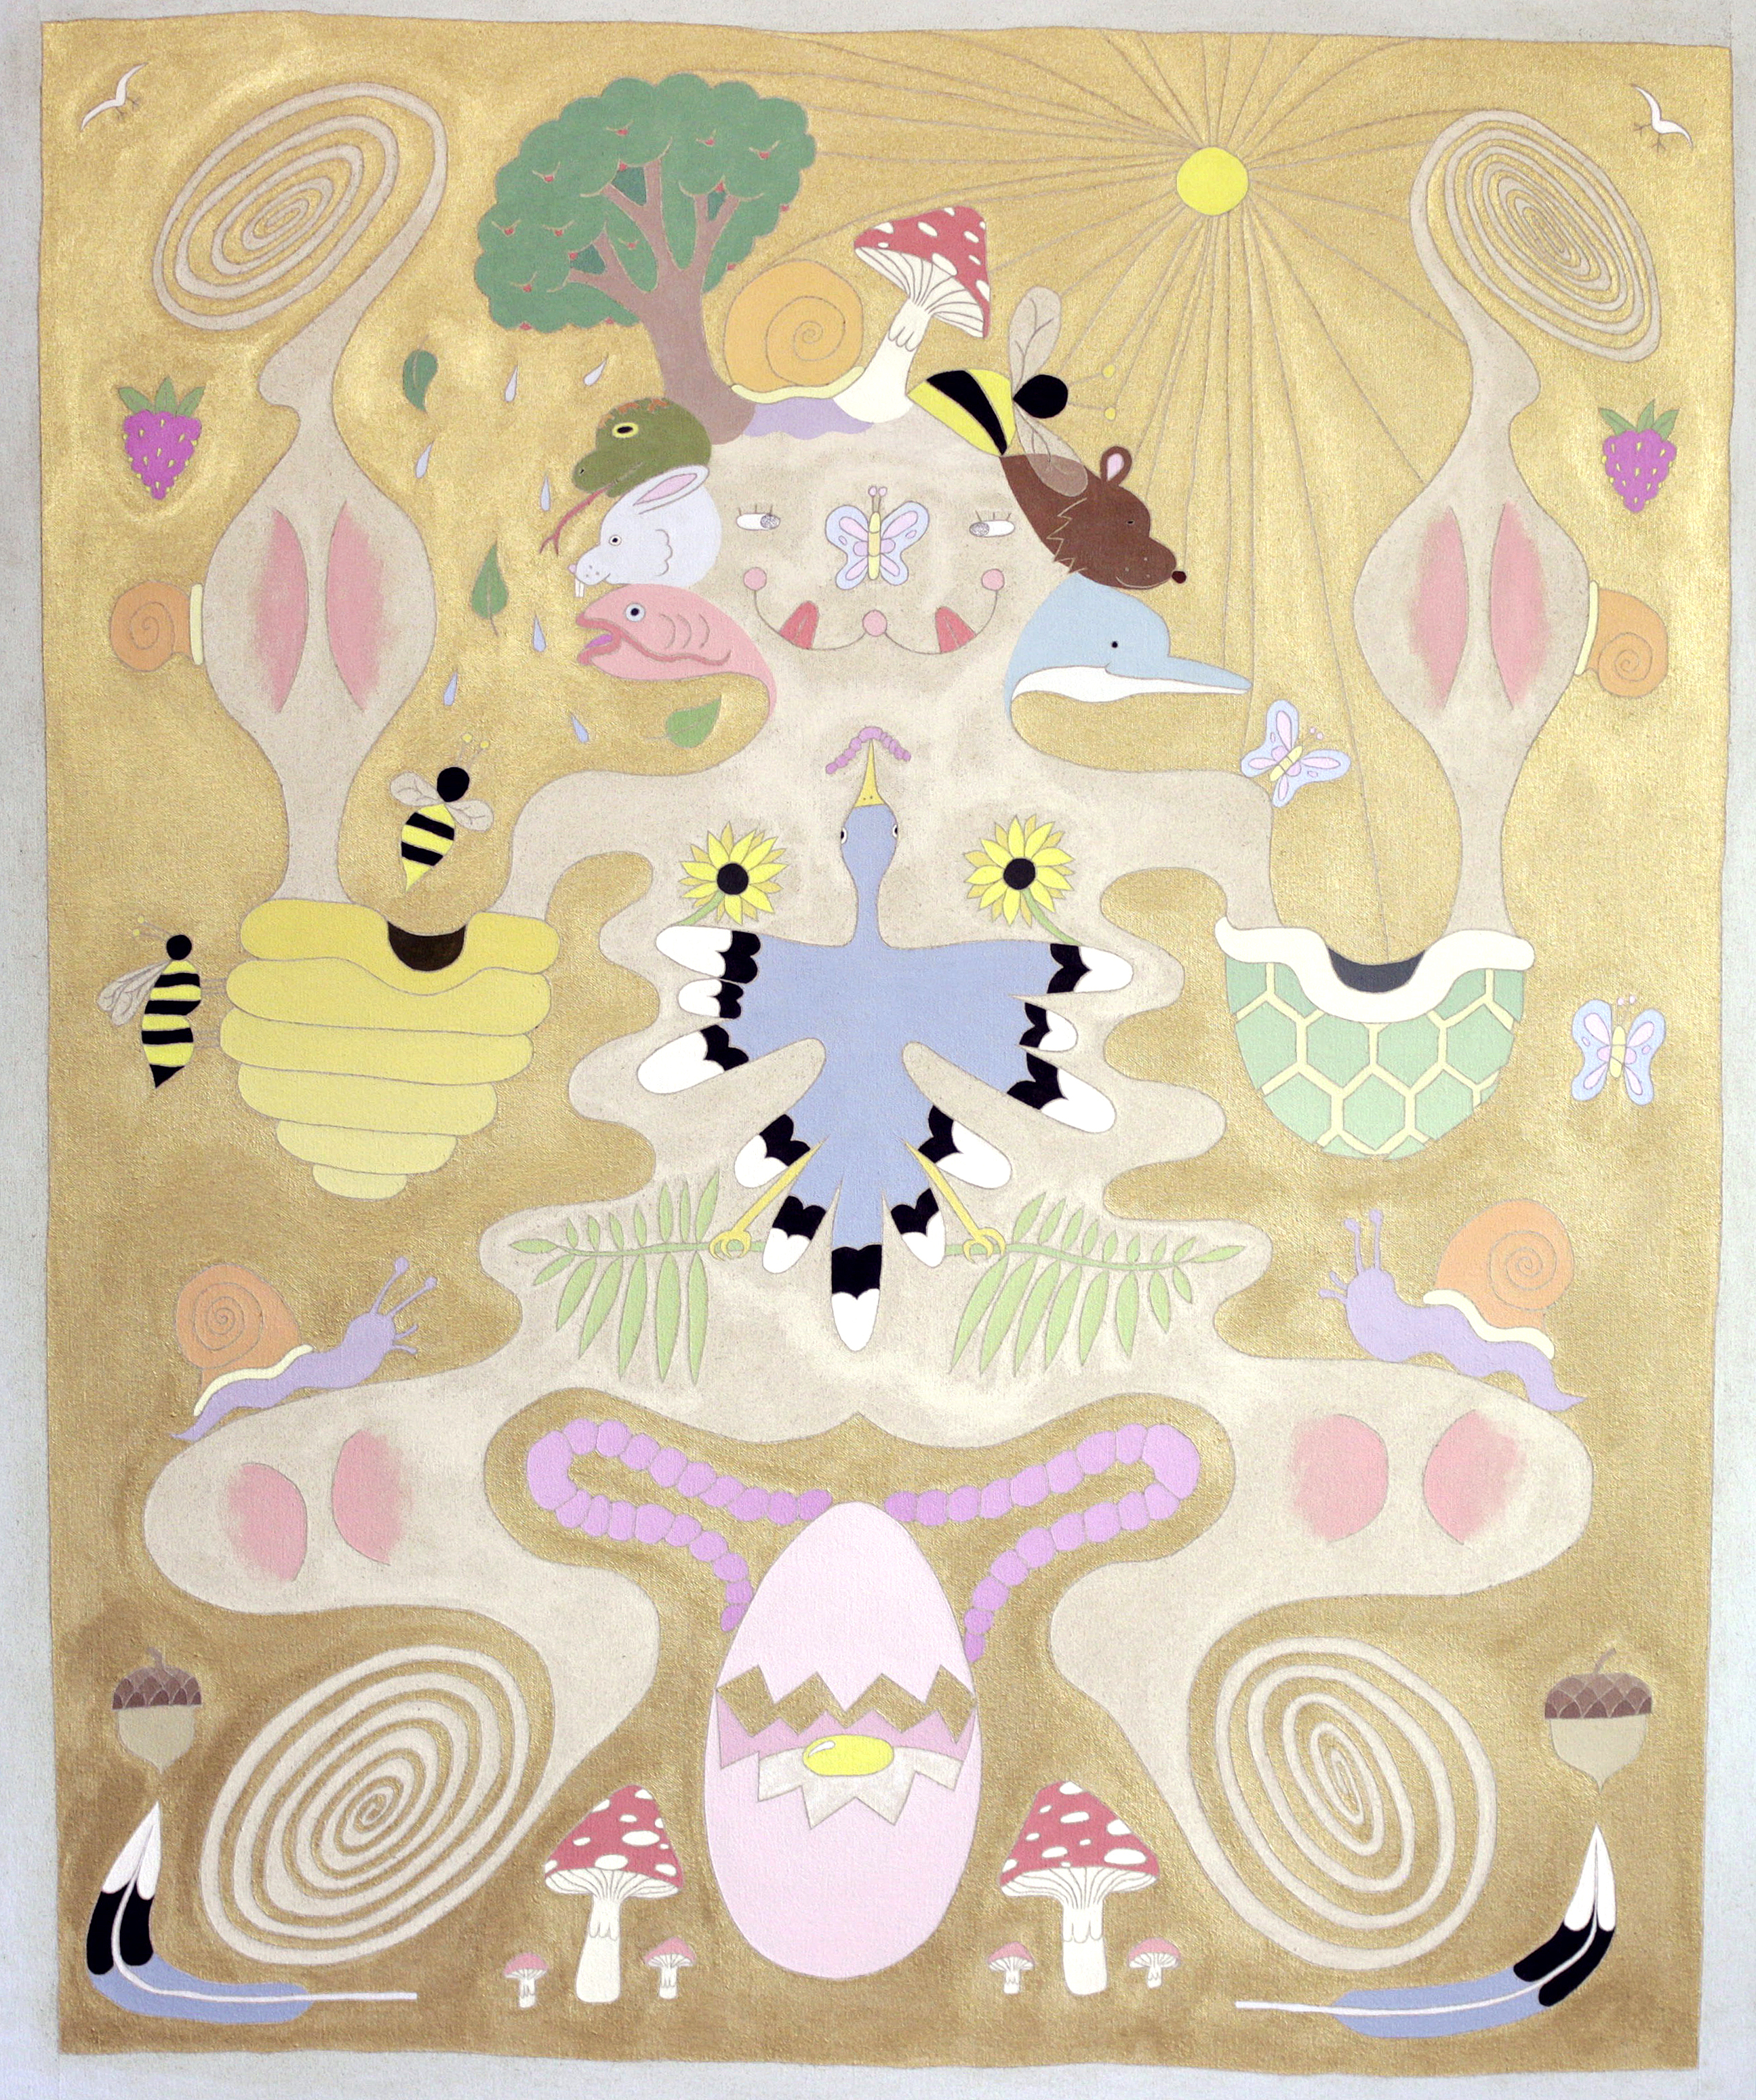 David Onri Anderson, Creature Creature, 2020, tree pollen, acrylic, and graphite on raw canvas, 32" x 38"